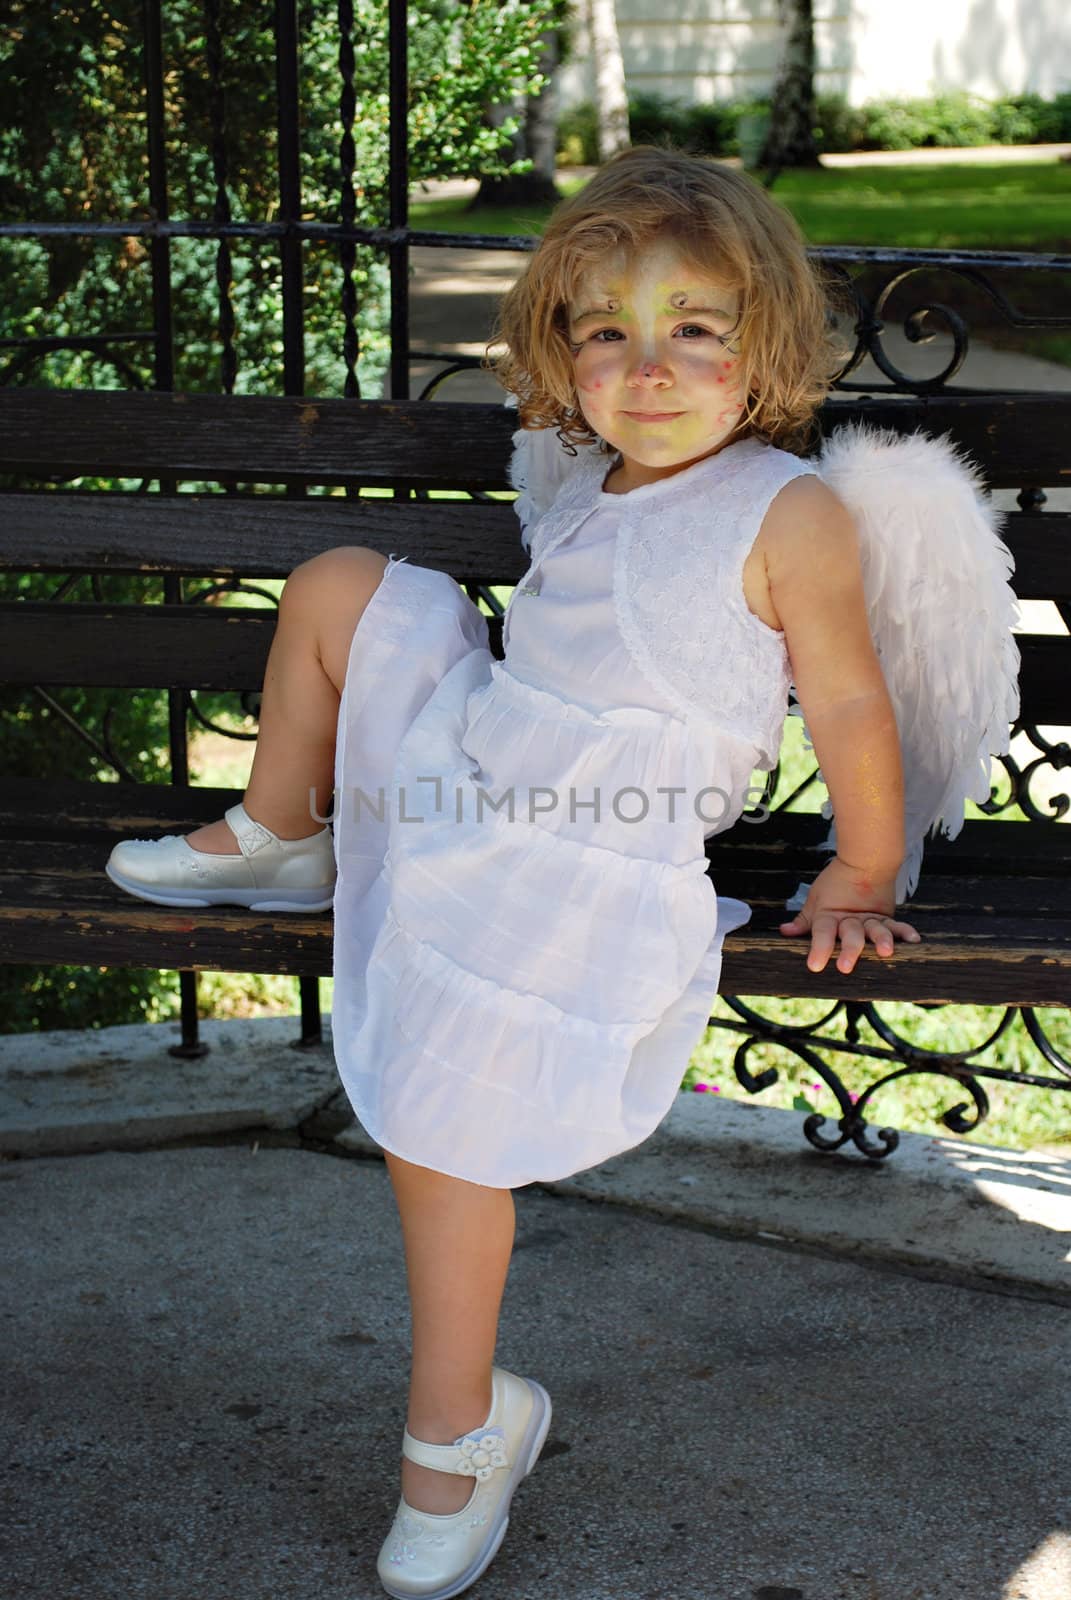 Little angel child in white dress